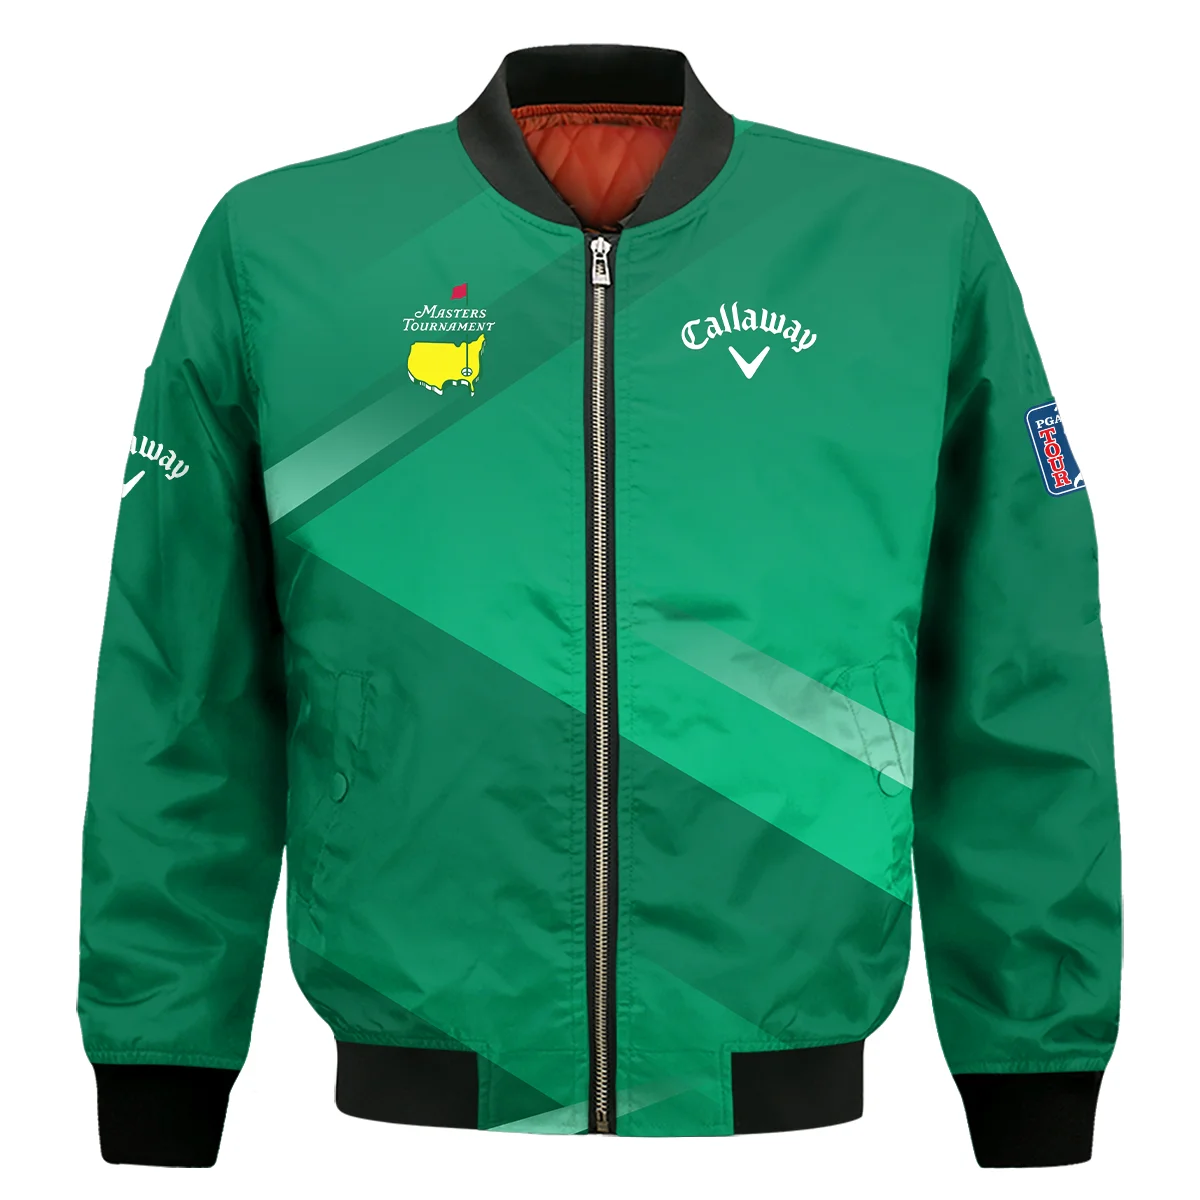 Callaway Masters Tournament Golf Bomber Jacket Green Gradient Pattern Sports Bomber Jacket GBJ1375